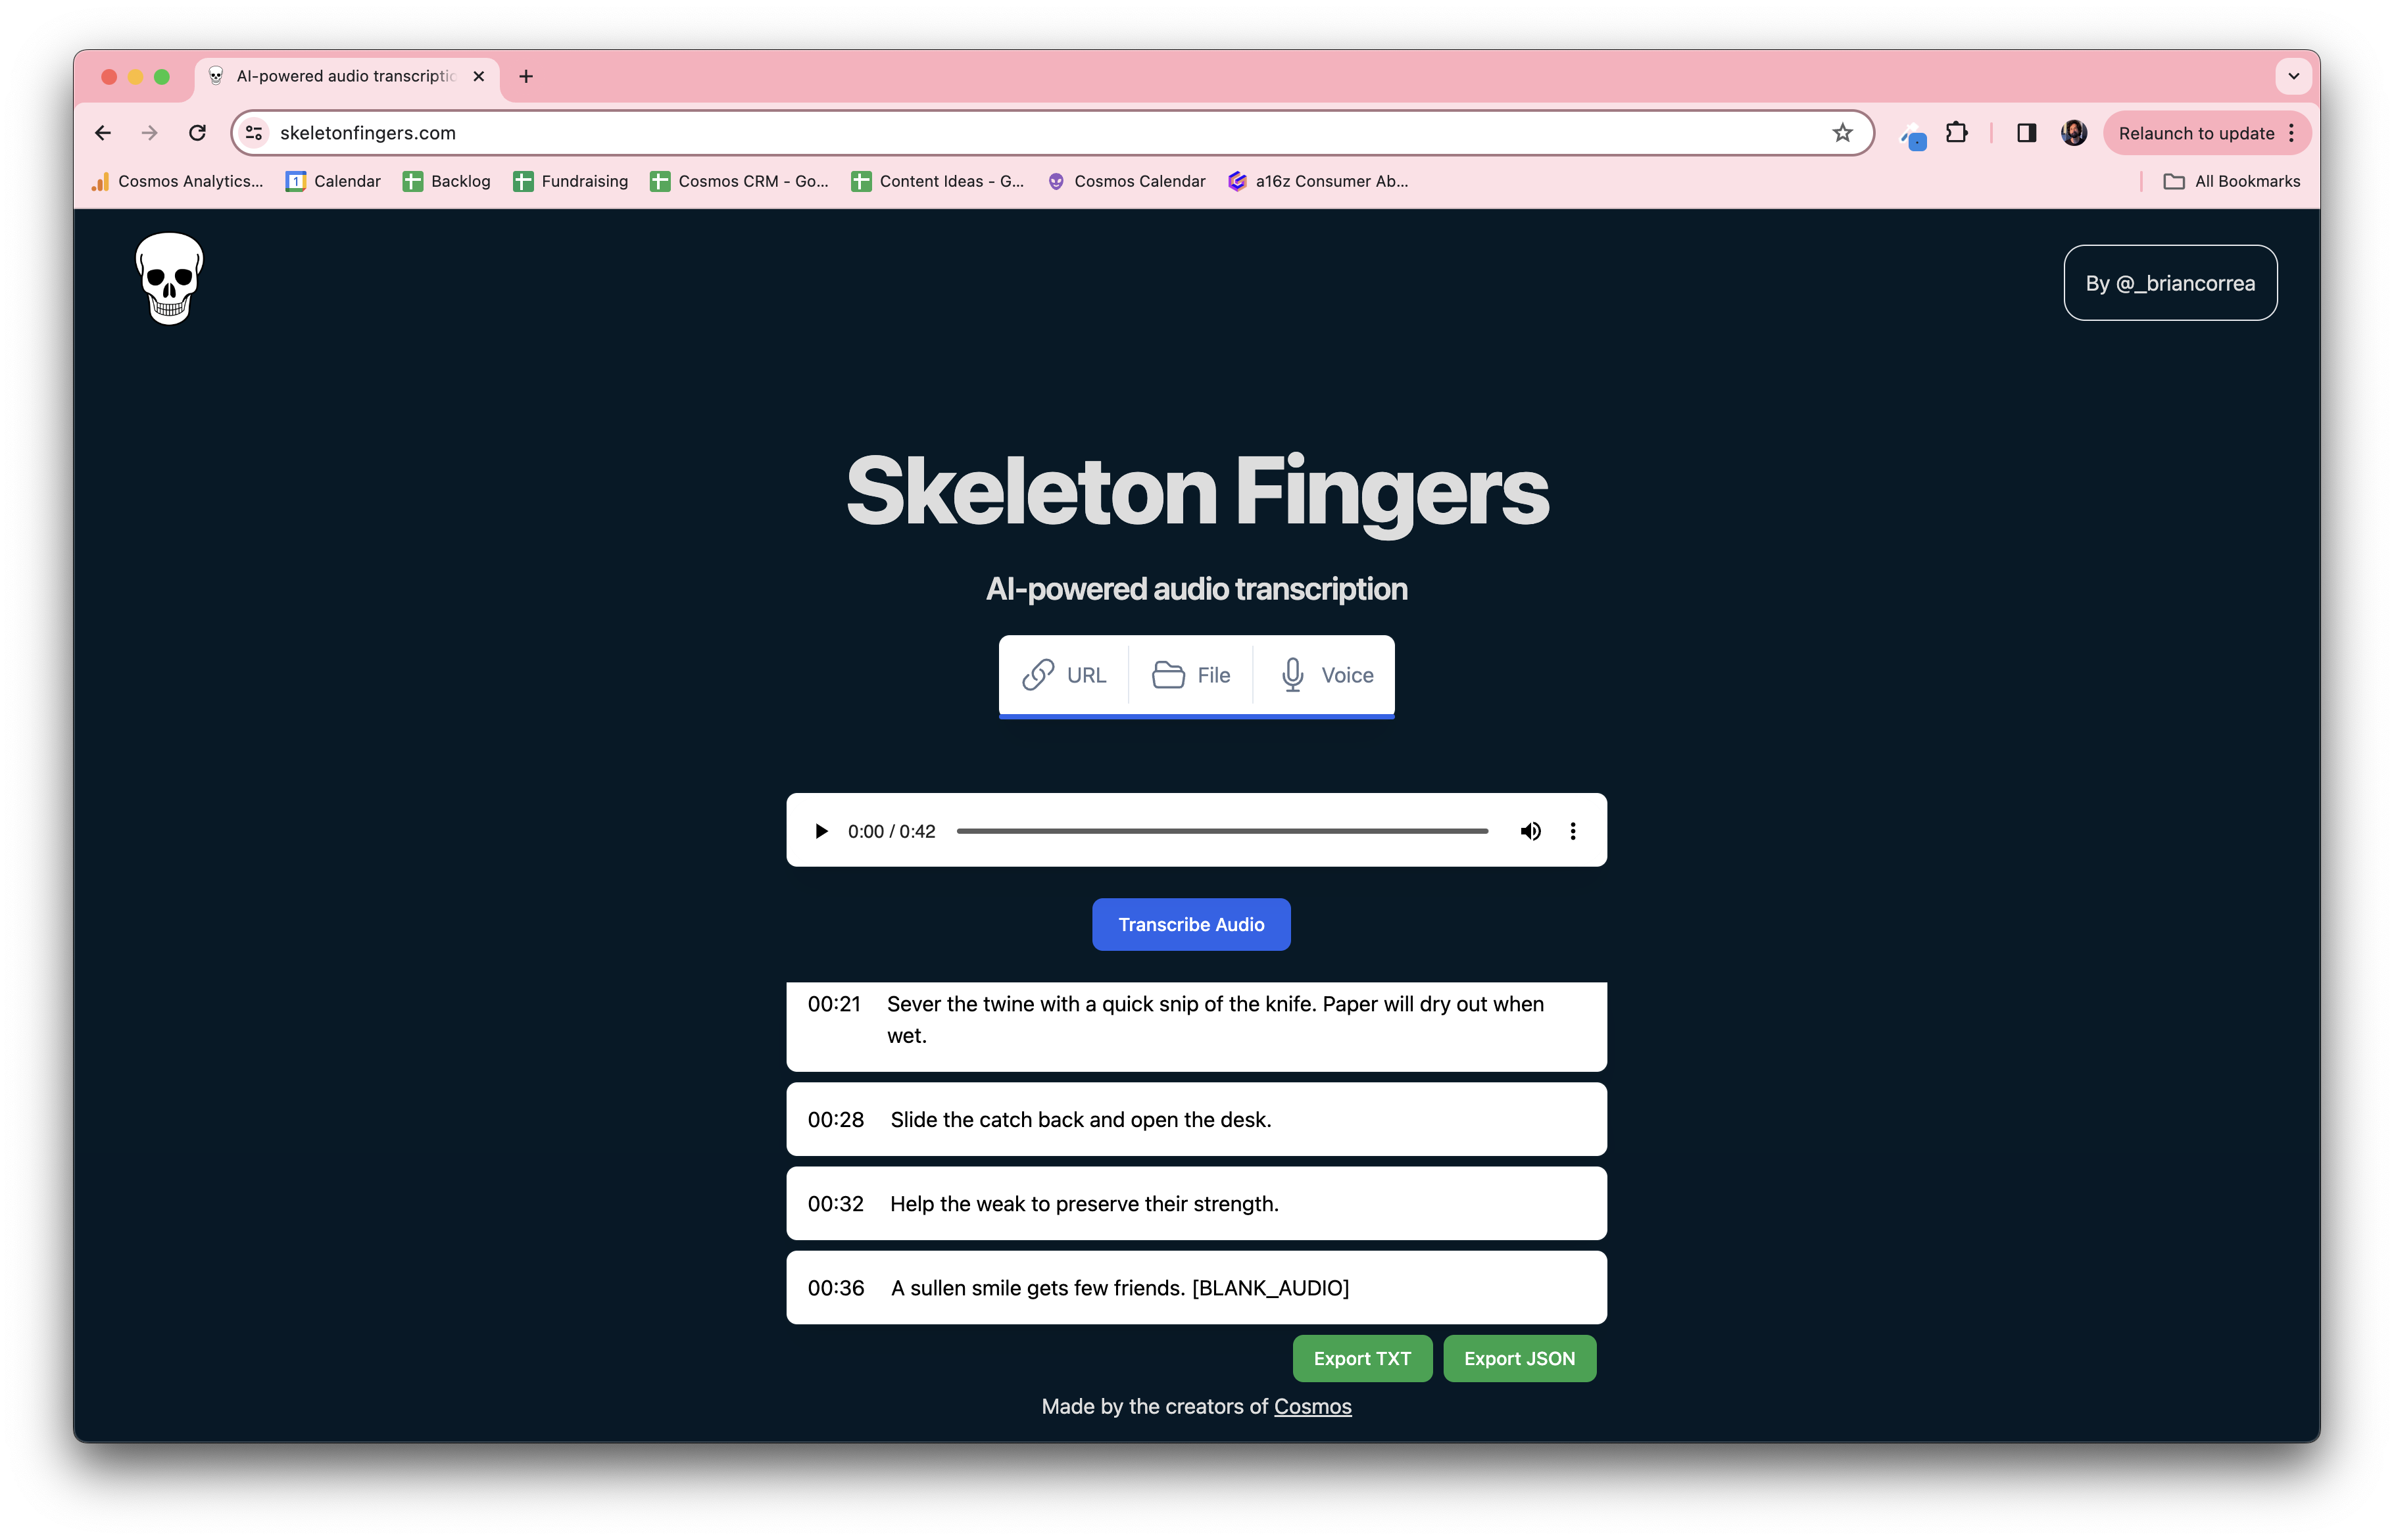 skeleton-fingers - AI-powered audio transcription